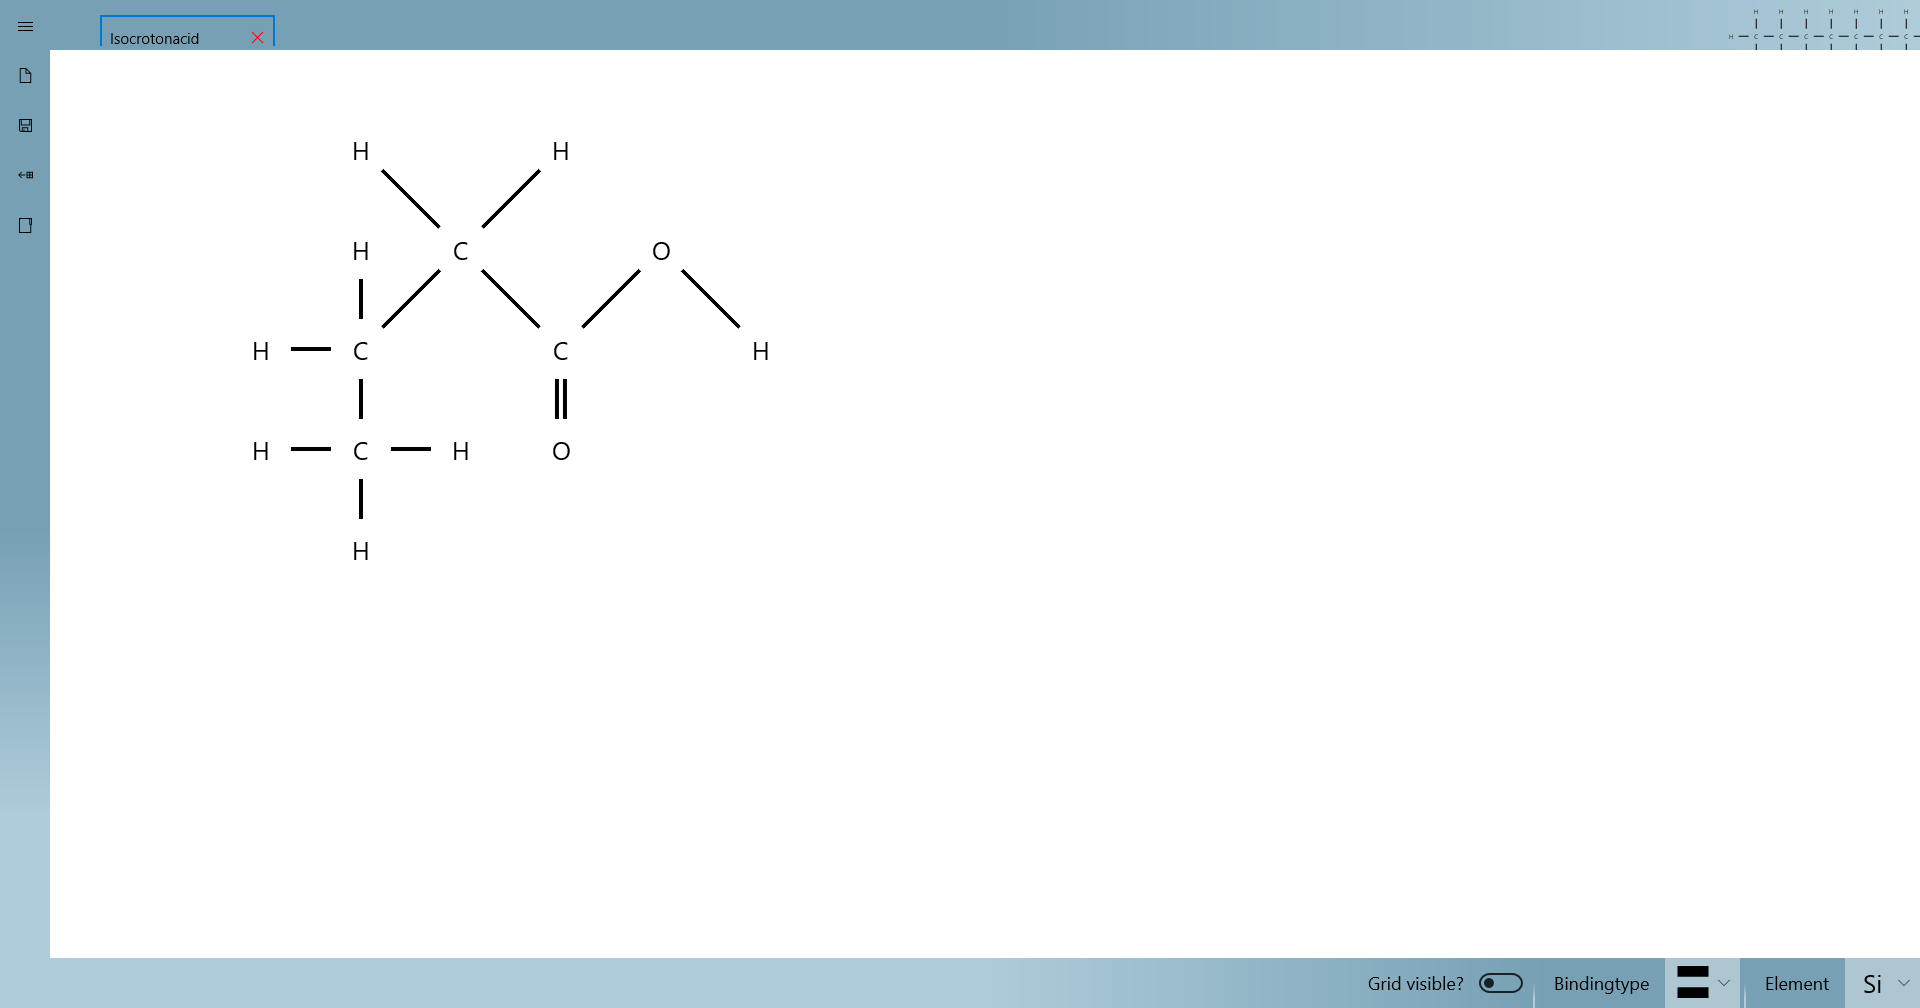 Isocrotonacid